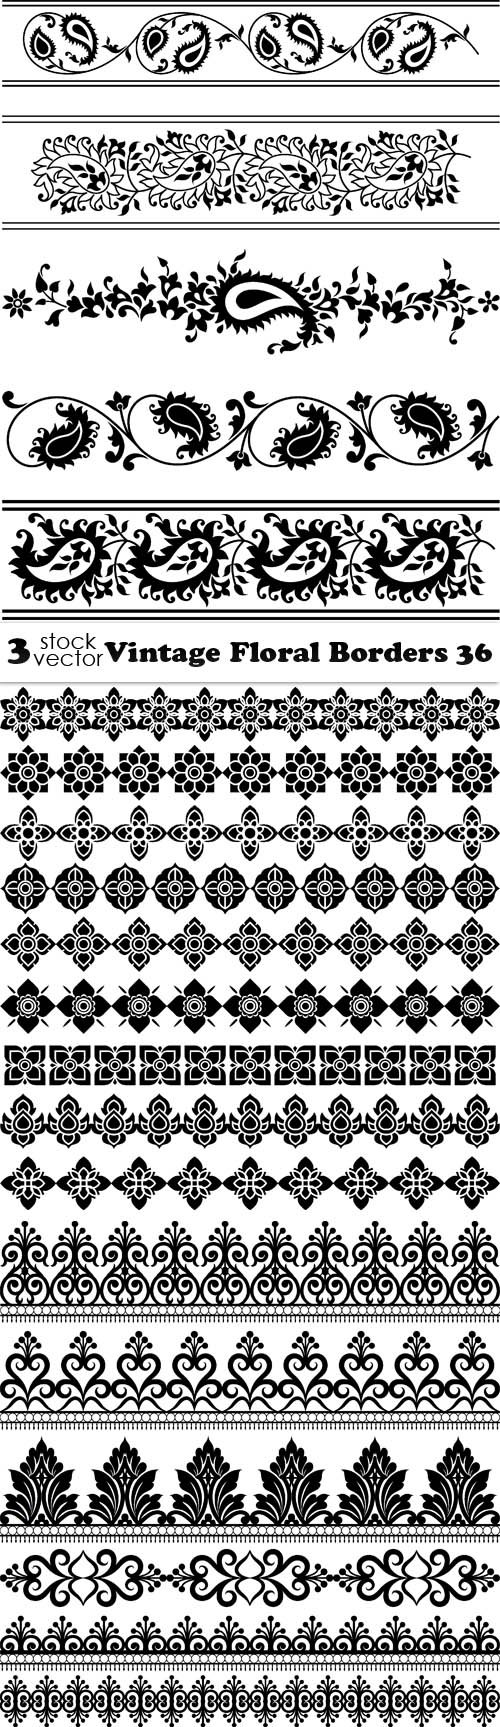 Vectors - Vintage Floral Borders 36